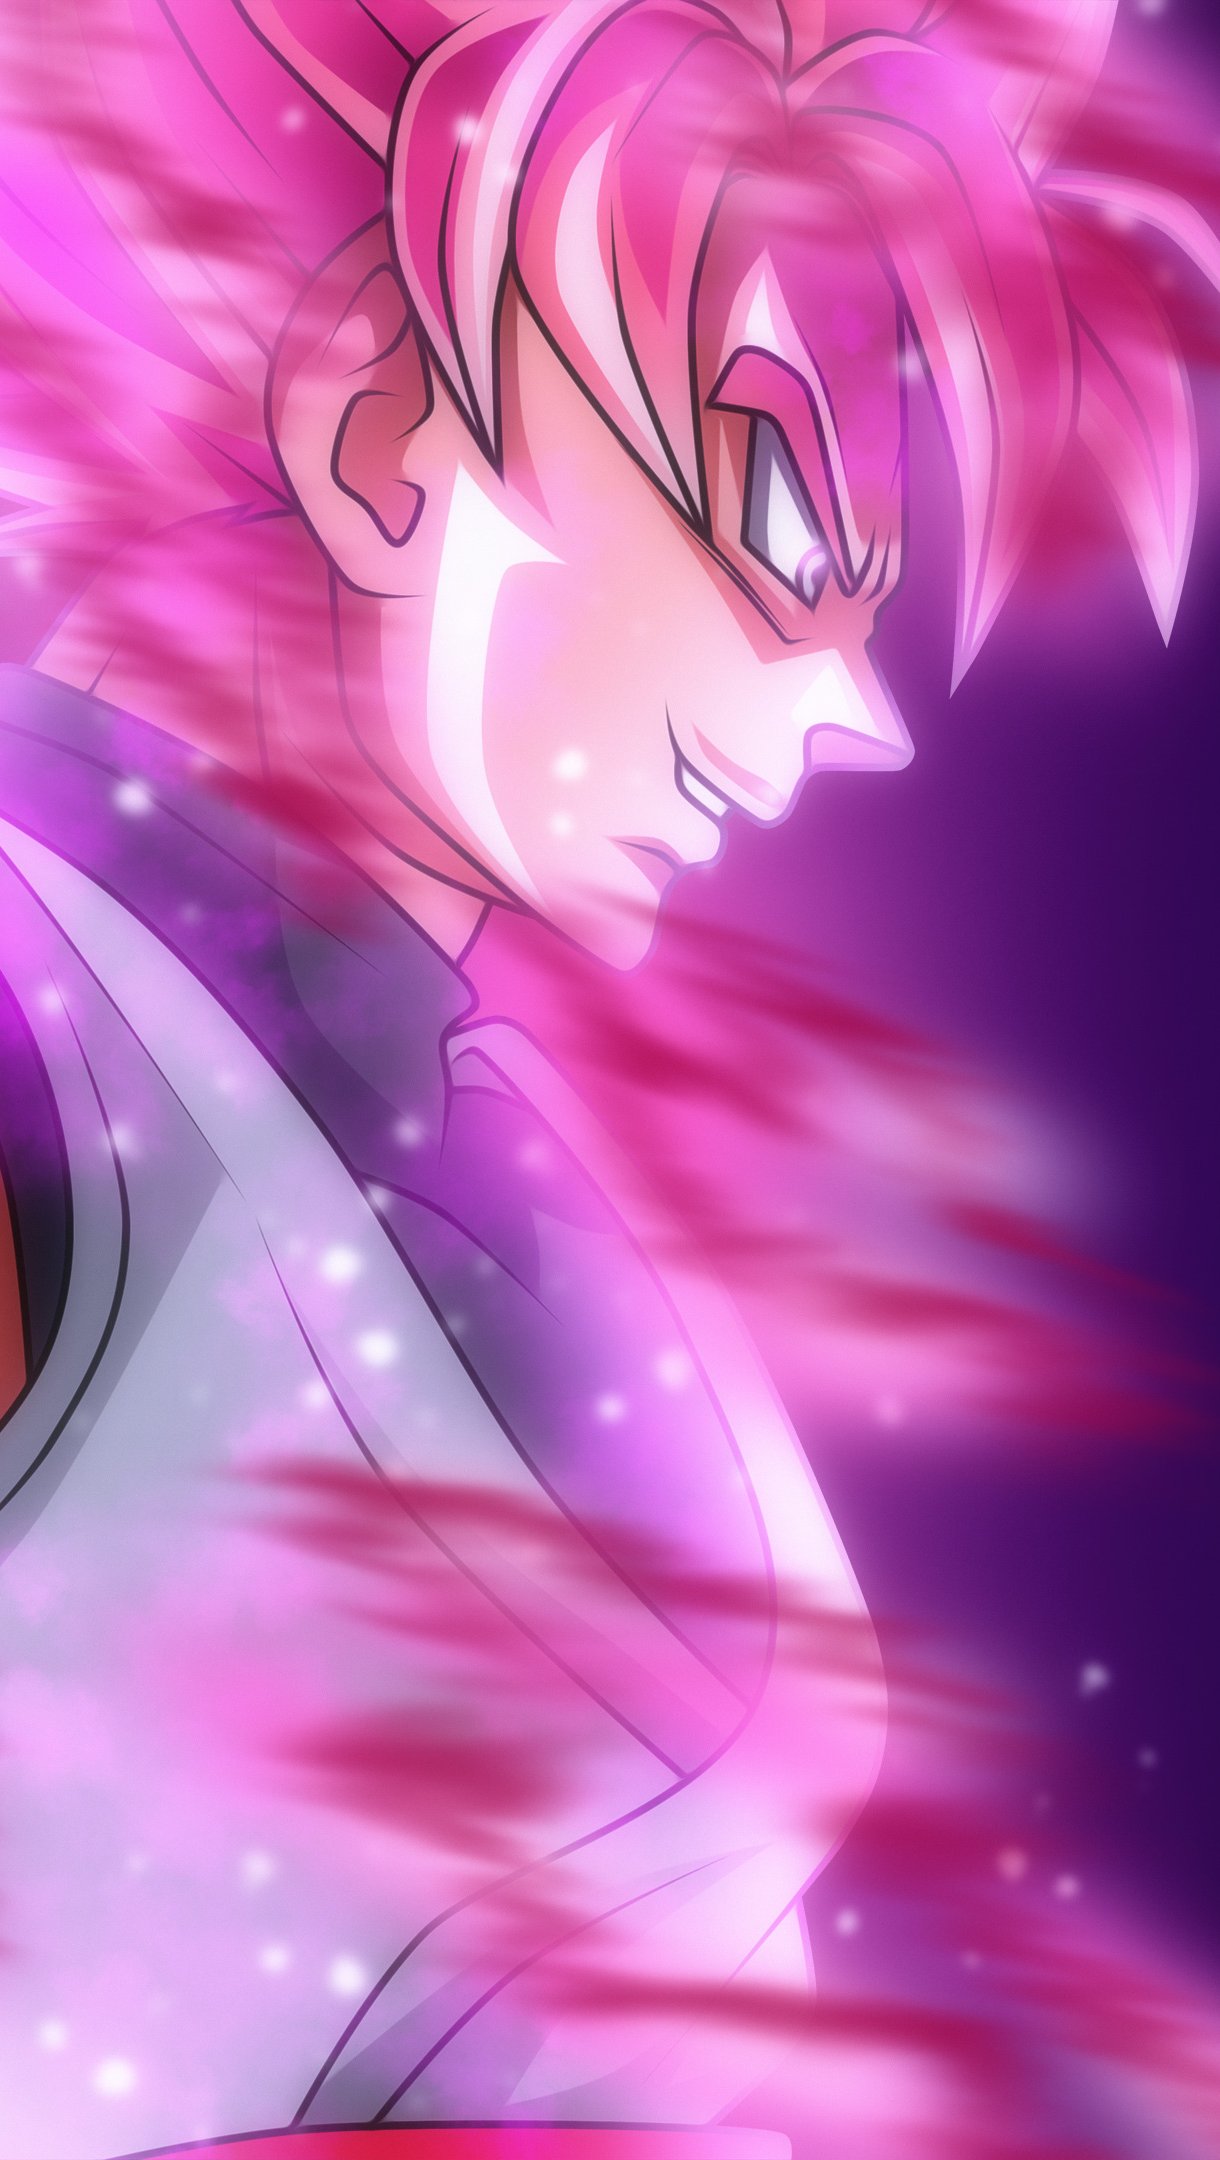 Black Goku SSR Dragon Ball Super Anime Wallpaper 4k Ultra HD ID:4549